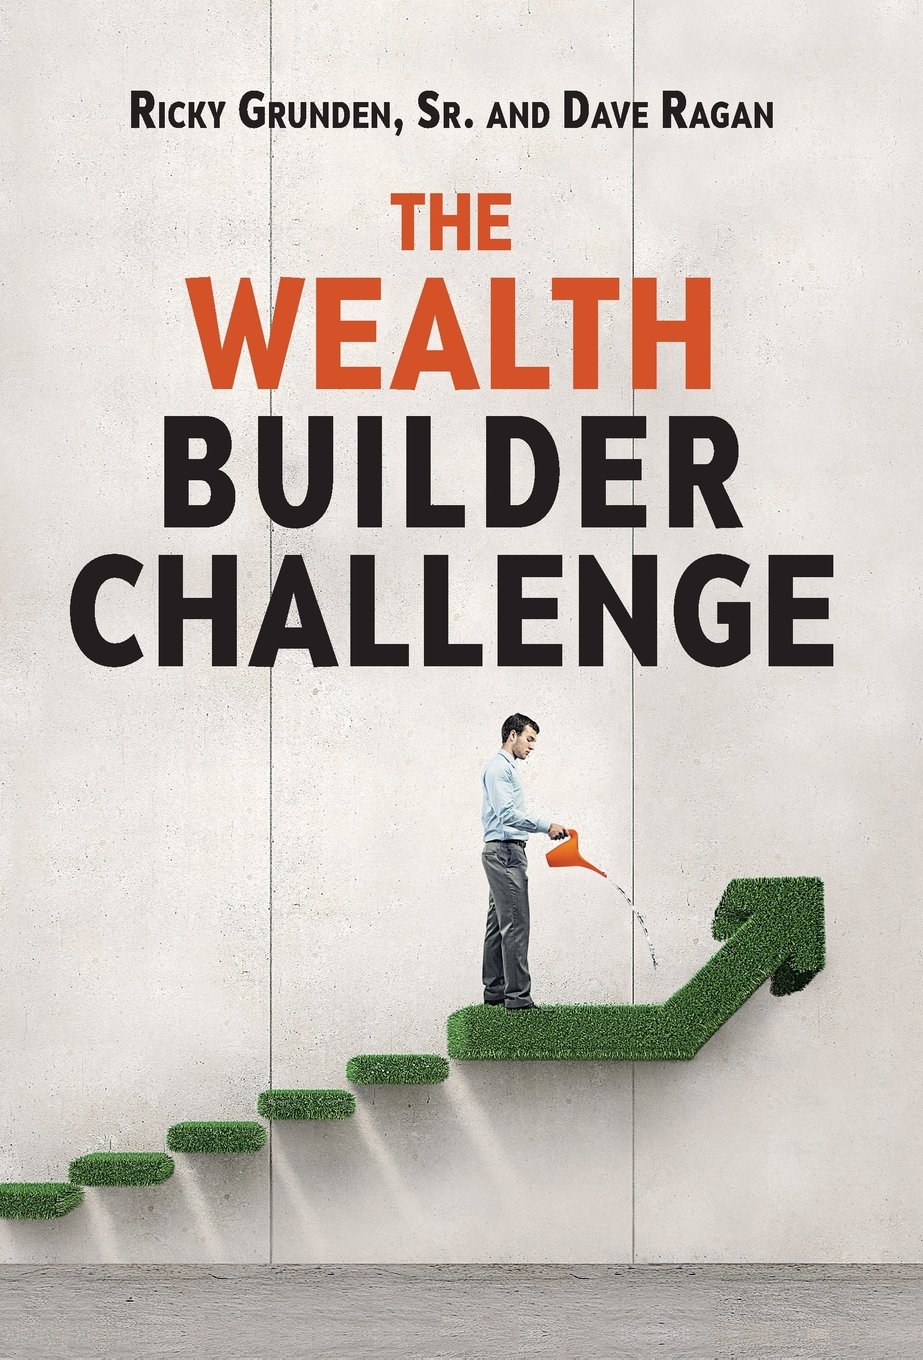 The Wealth Builder Challenge by Ricky Grunden Sr. and Dave Ragan